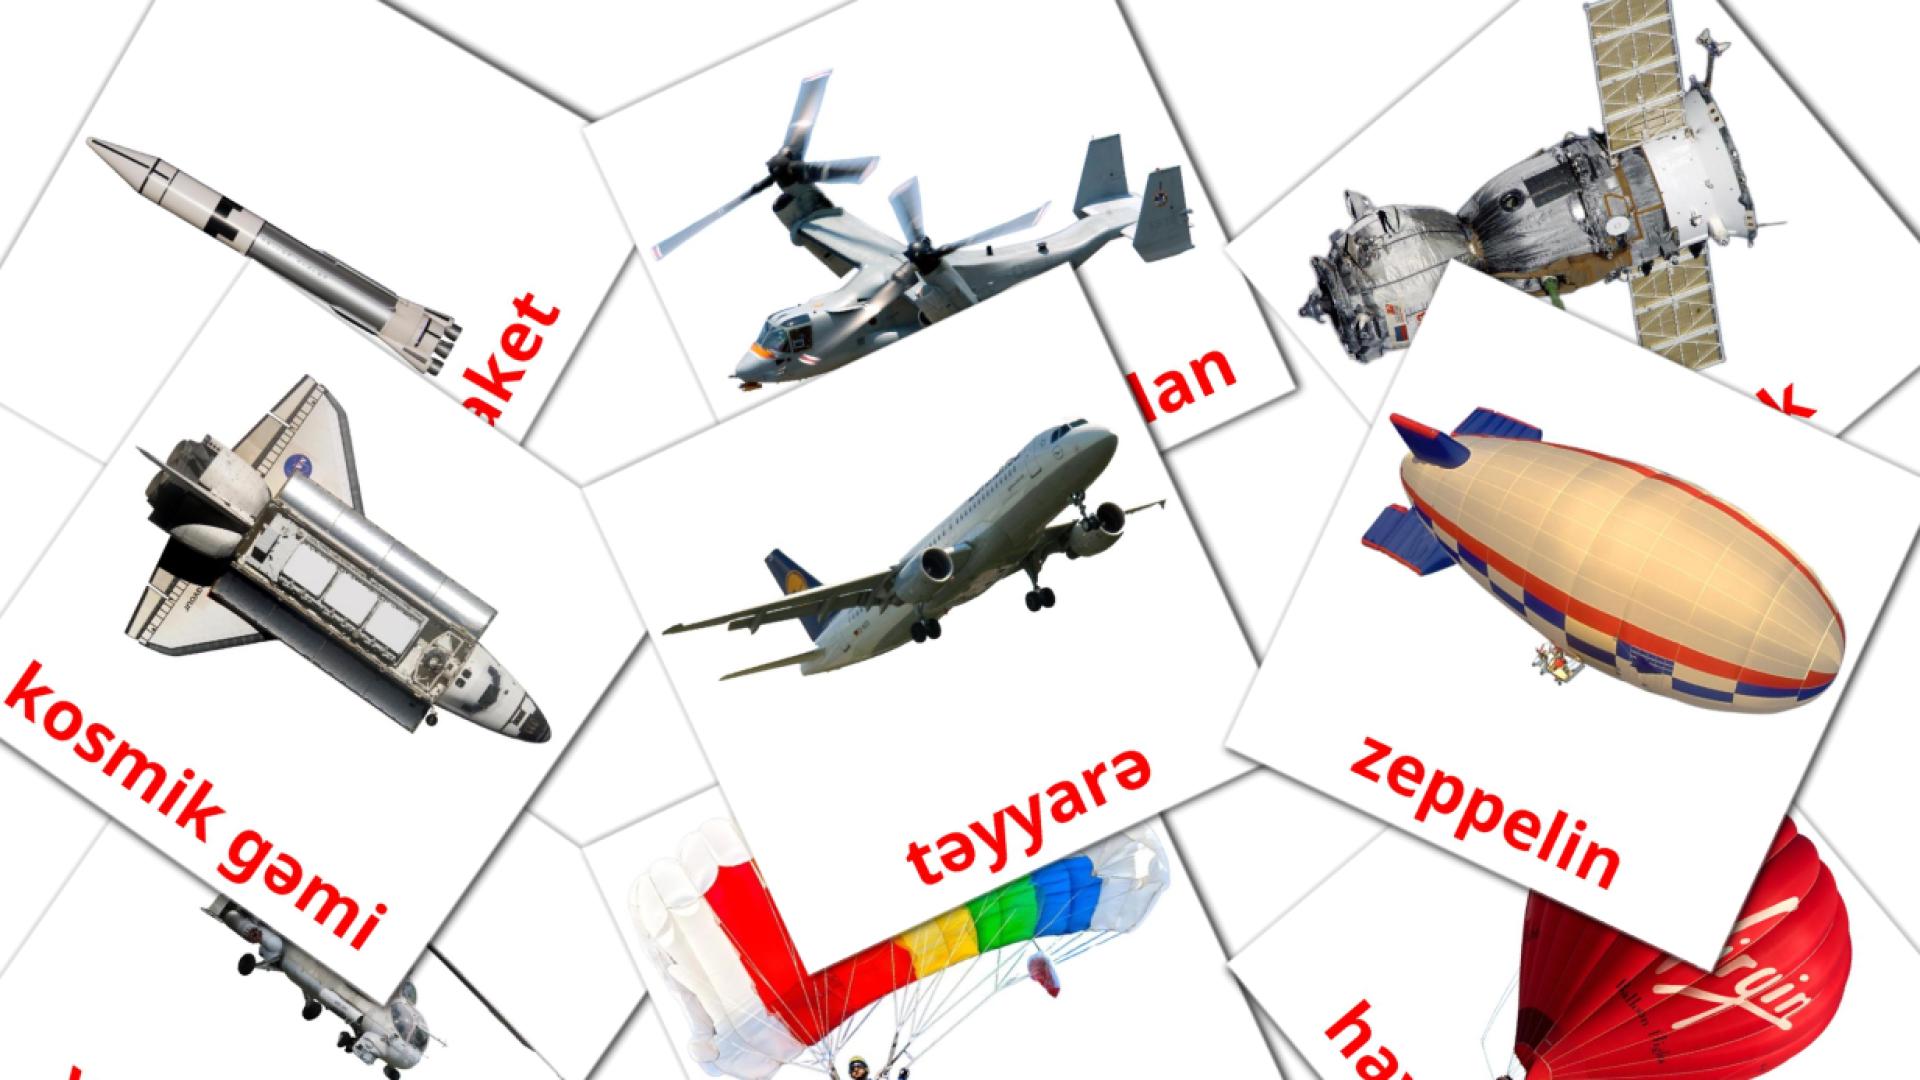 Aircraft - azerbaijani vocabulary cards